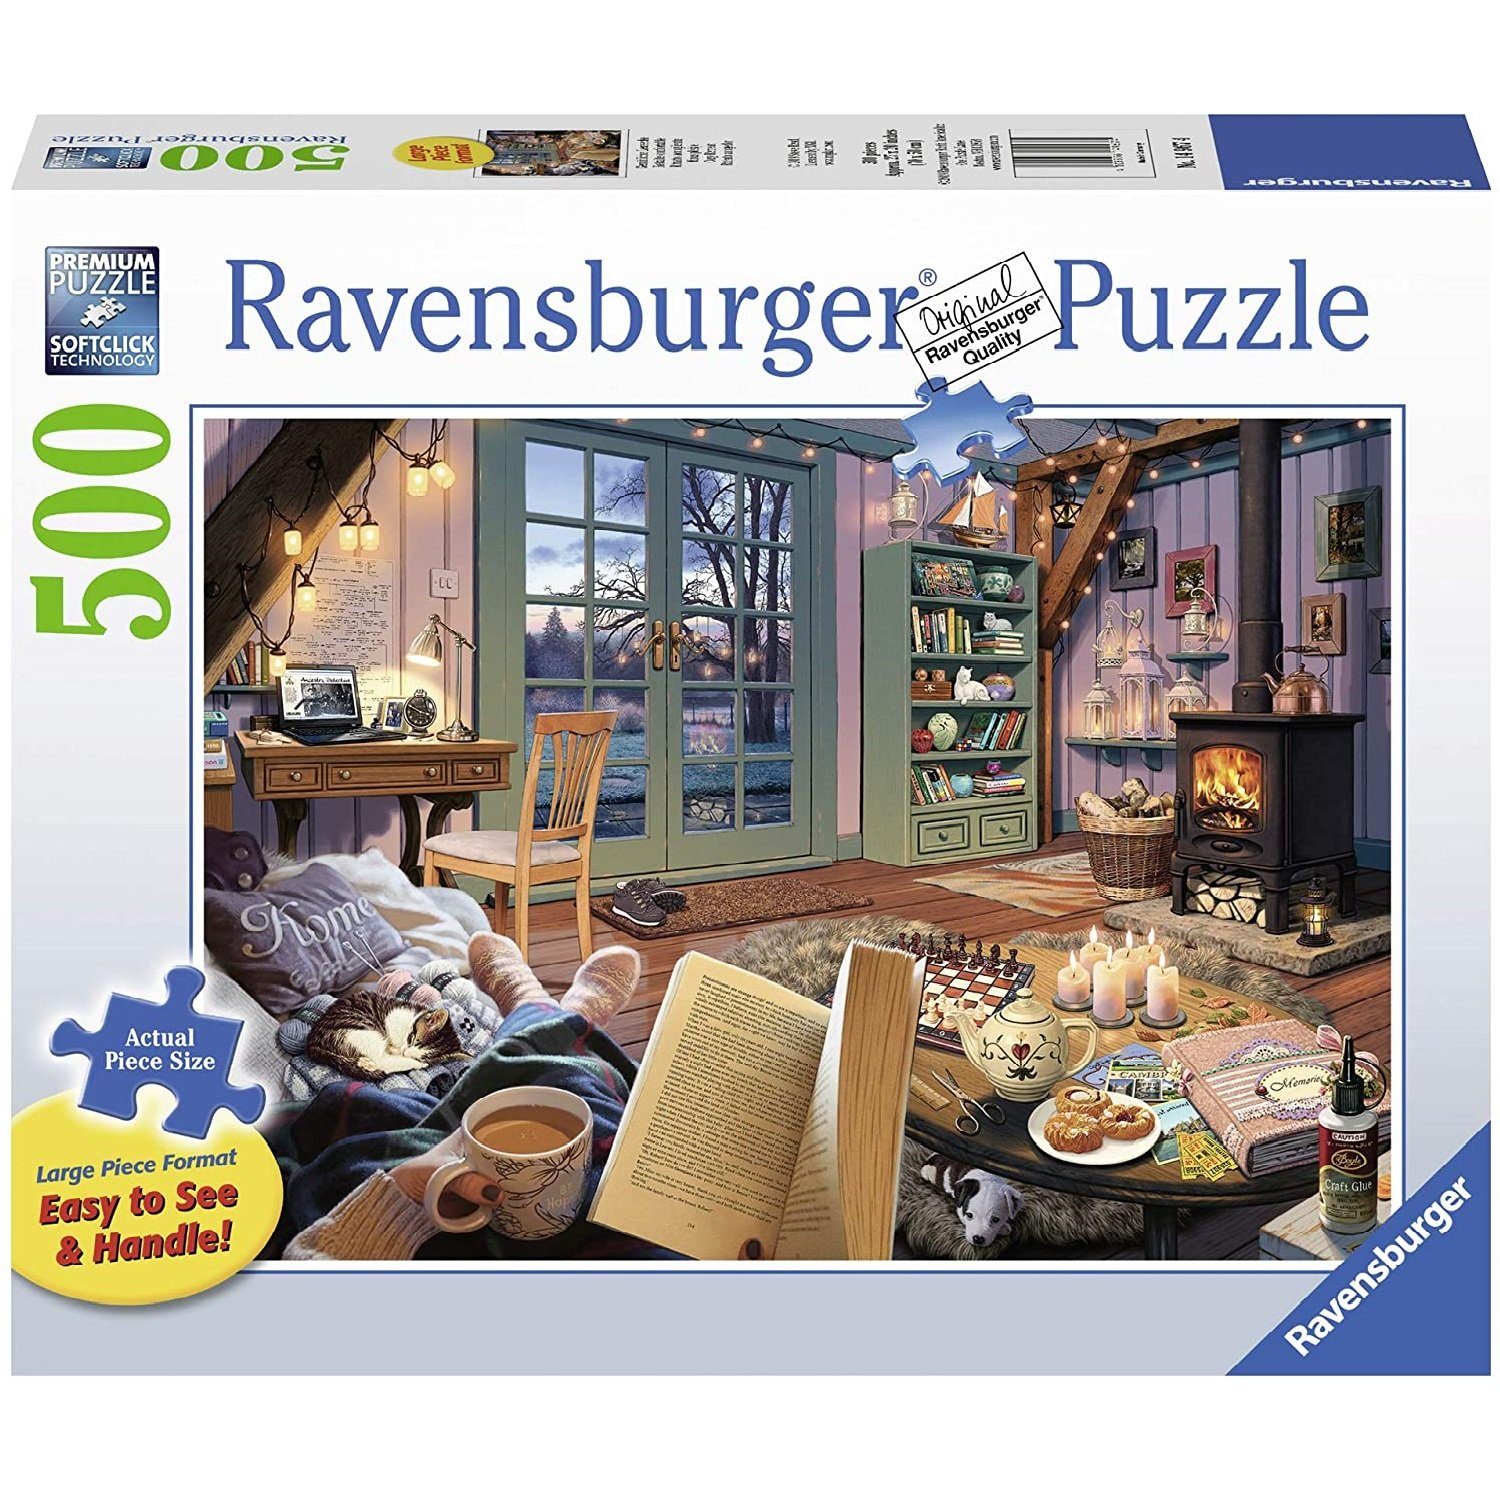 Ravensburger Puzzle Ravensburger - Gemütliche Leseecke, 500 Teile Puzzle,  Extra Große, 500 Puzzleteile